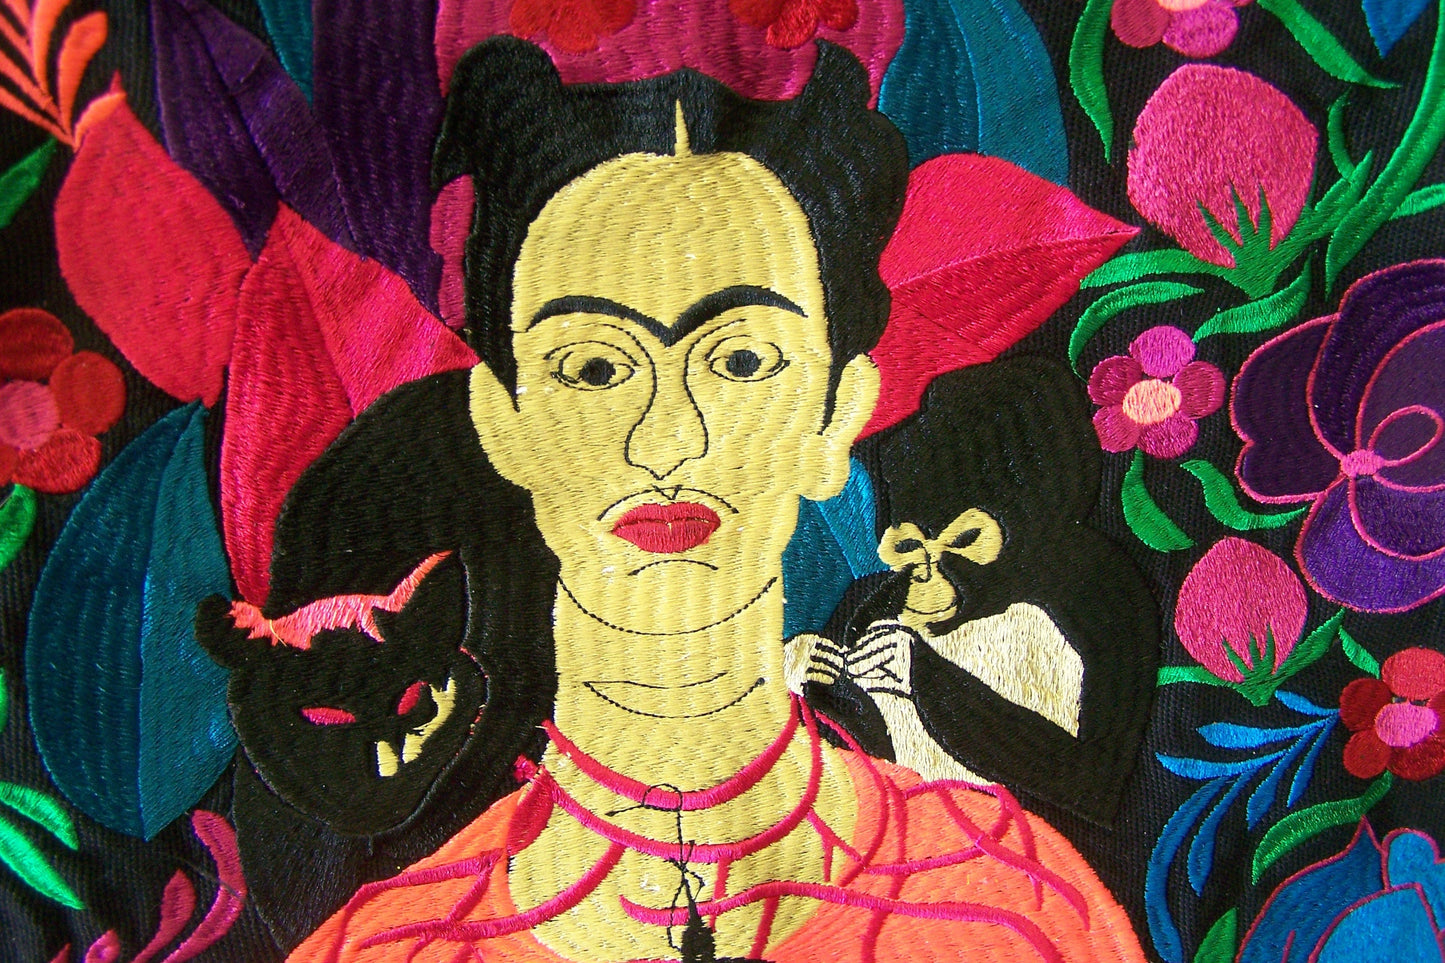 Frida! Large Embroidered Leather Shoulder Bag Purse, Lined Interior, 2 Zipper Pouches, Frida Kahlo - Black #2